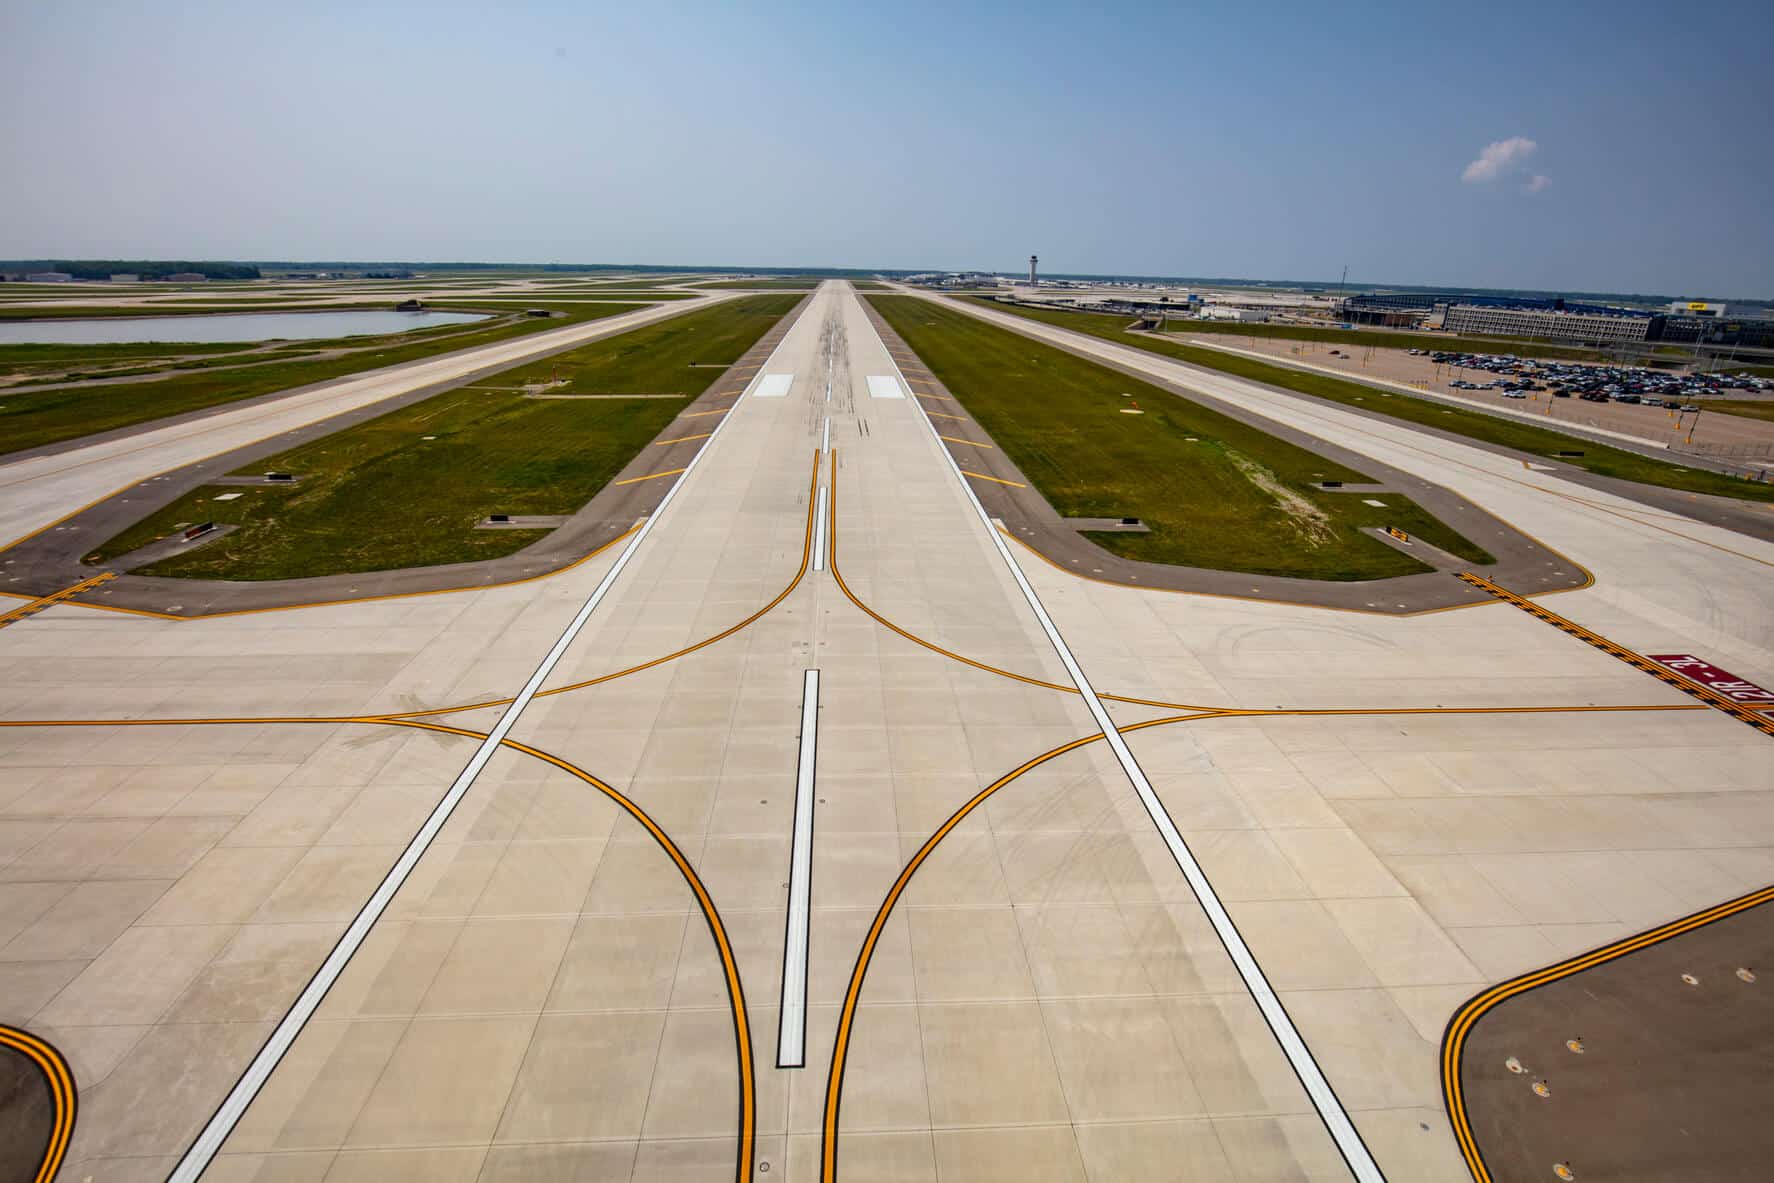 Runway of the Detroit Airport